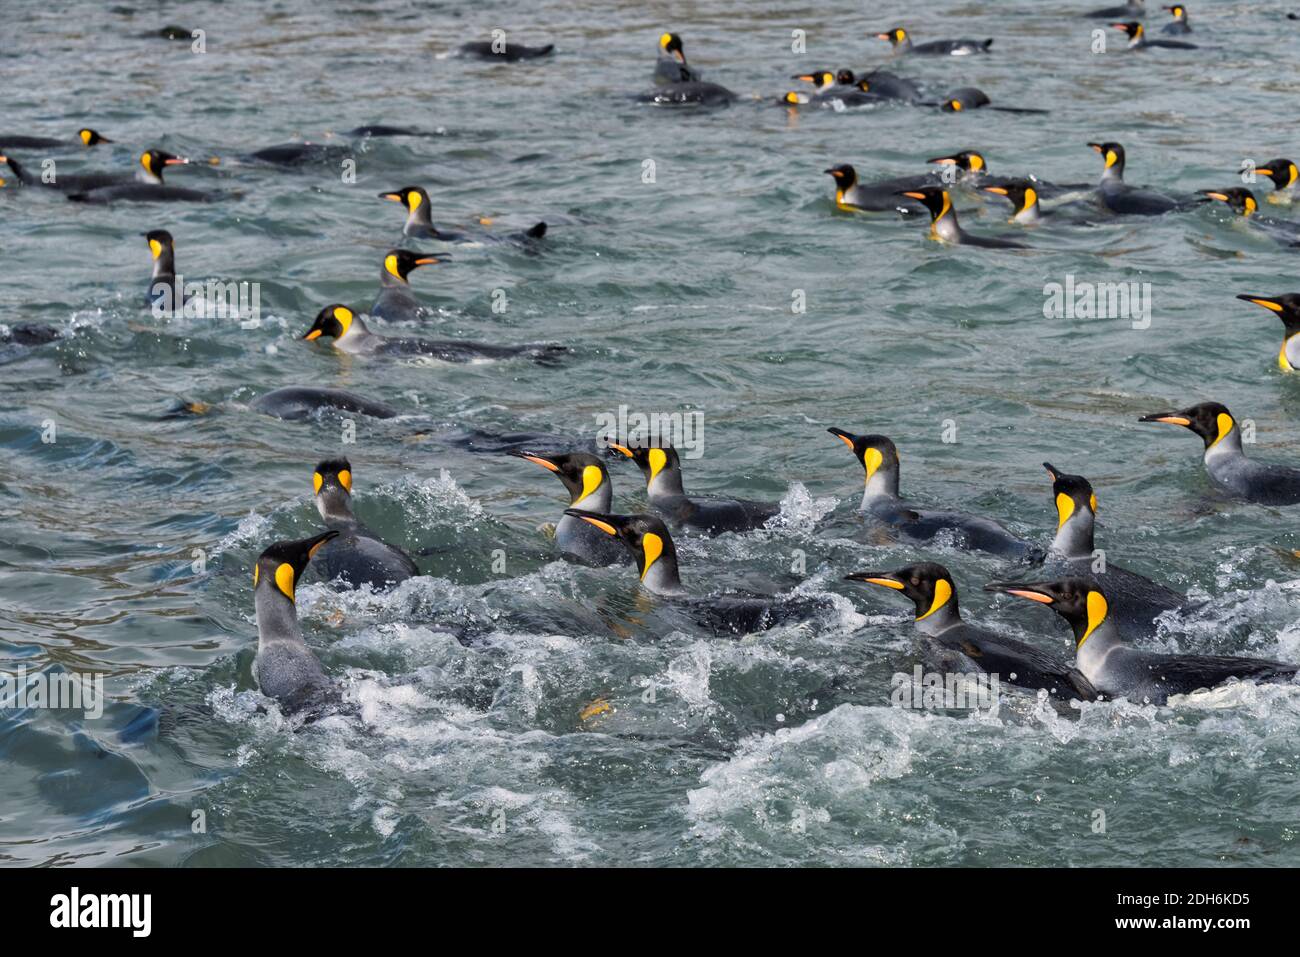 King Penguins swimming in South Atlantic Ocean, South Georgia Island Stock Photo